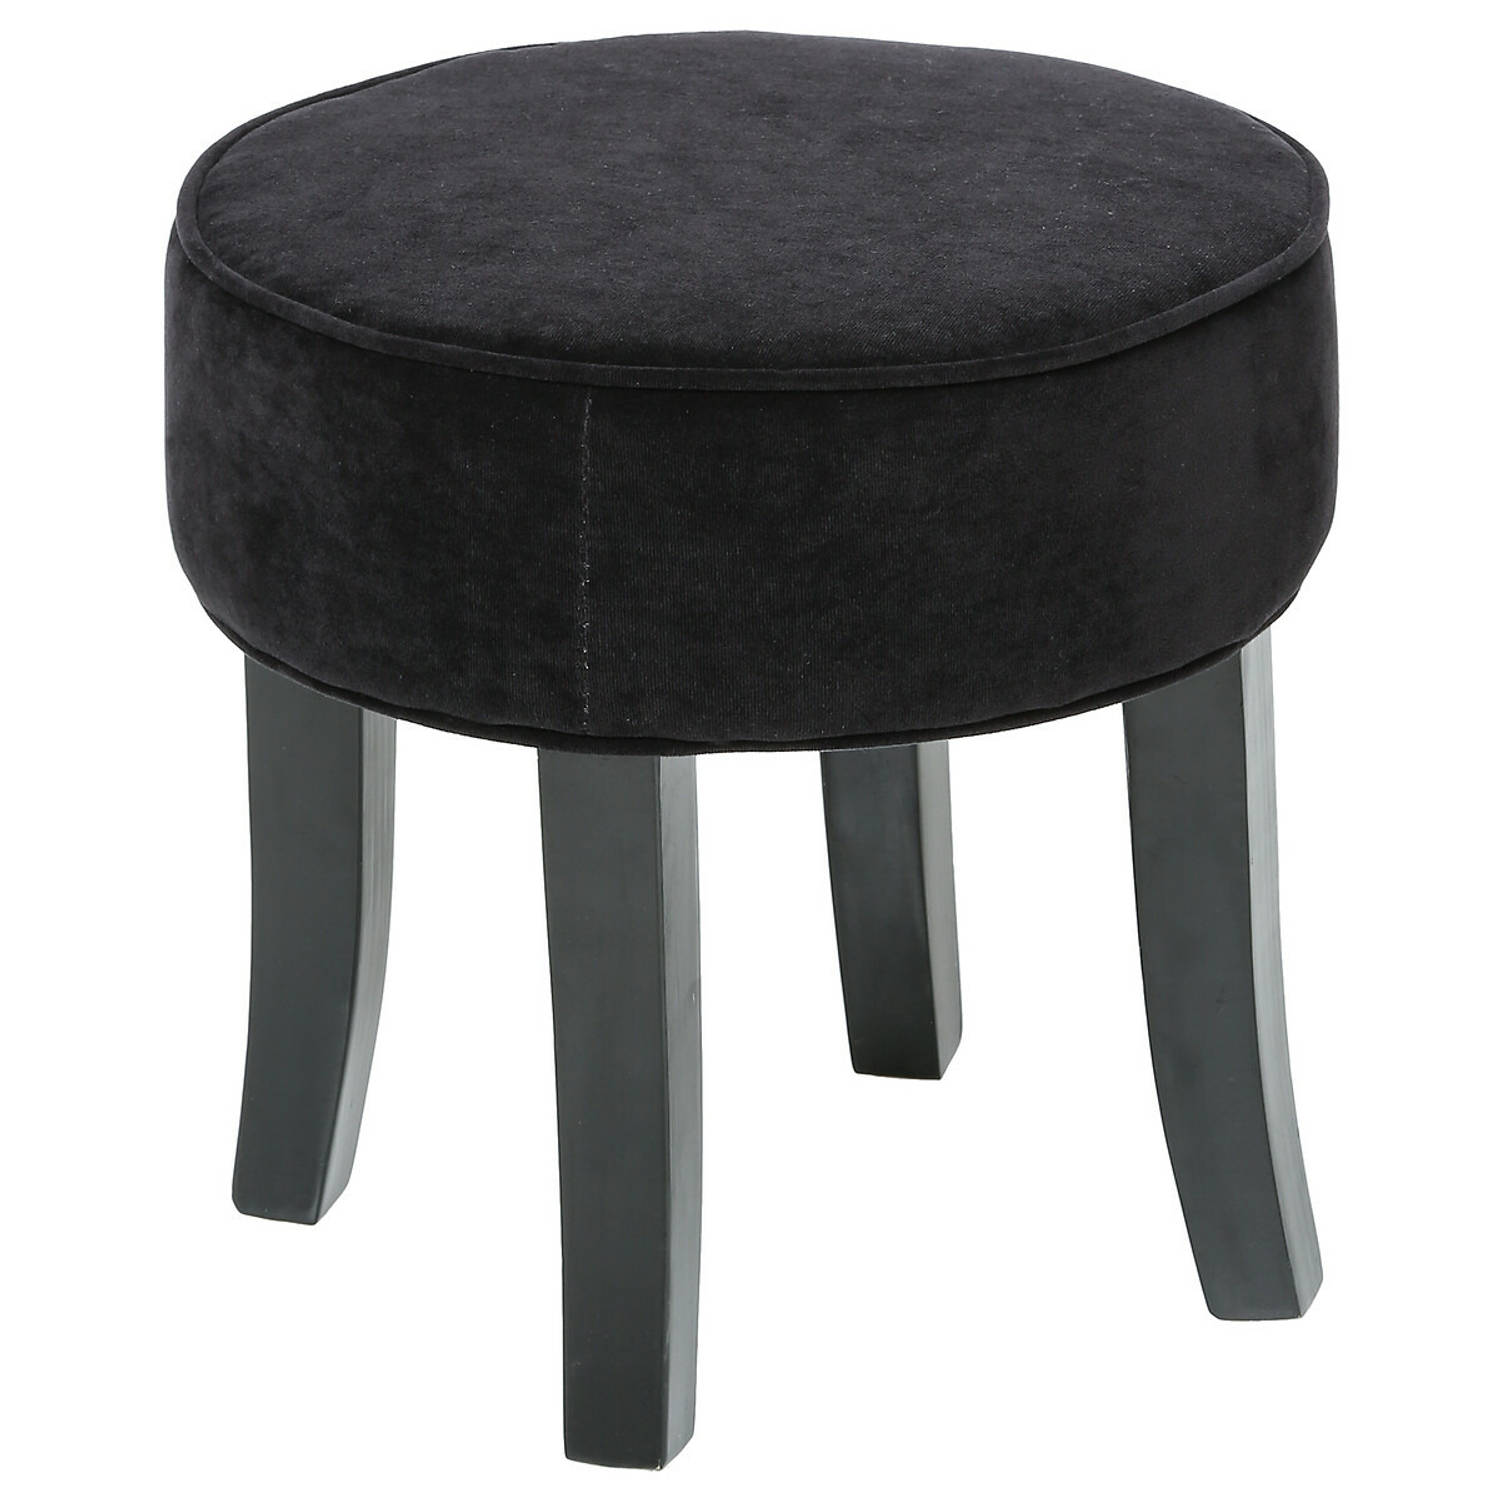 Atmosphera Zit krukje-bijzet stoel hout-stof zwart fluweel D35 x H40 cm Krukjes